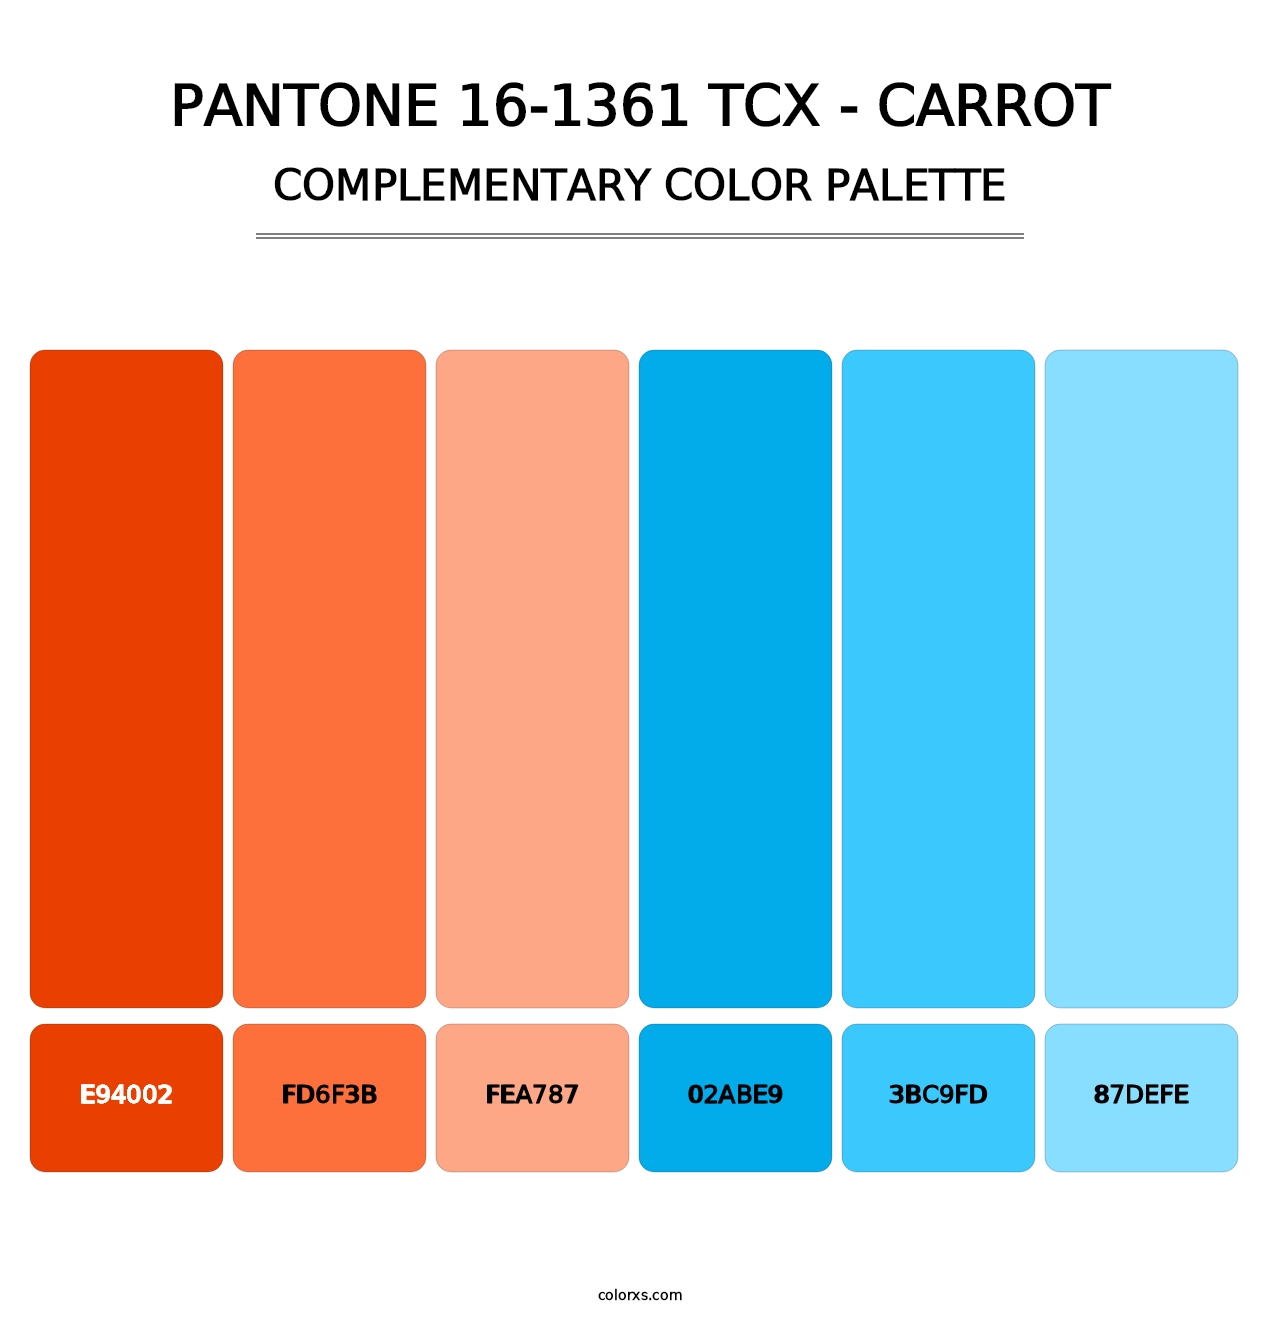 PANTONE 16-1361 TCX - Carrot - Complementary Color Palette